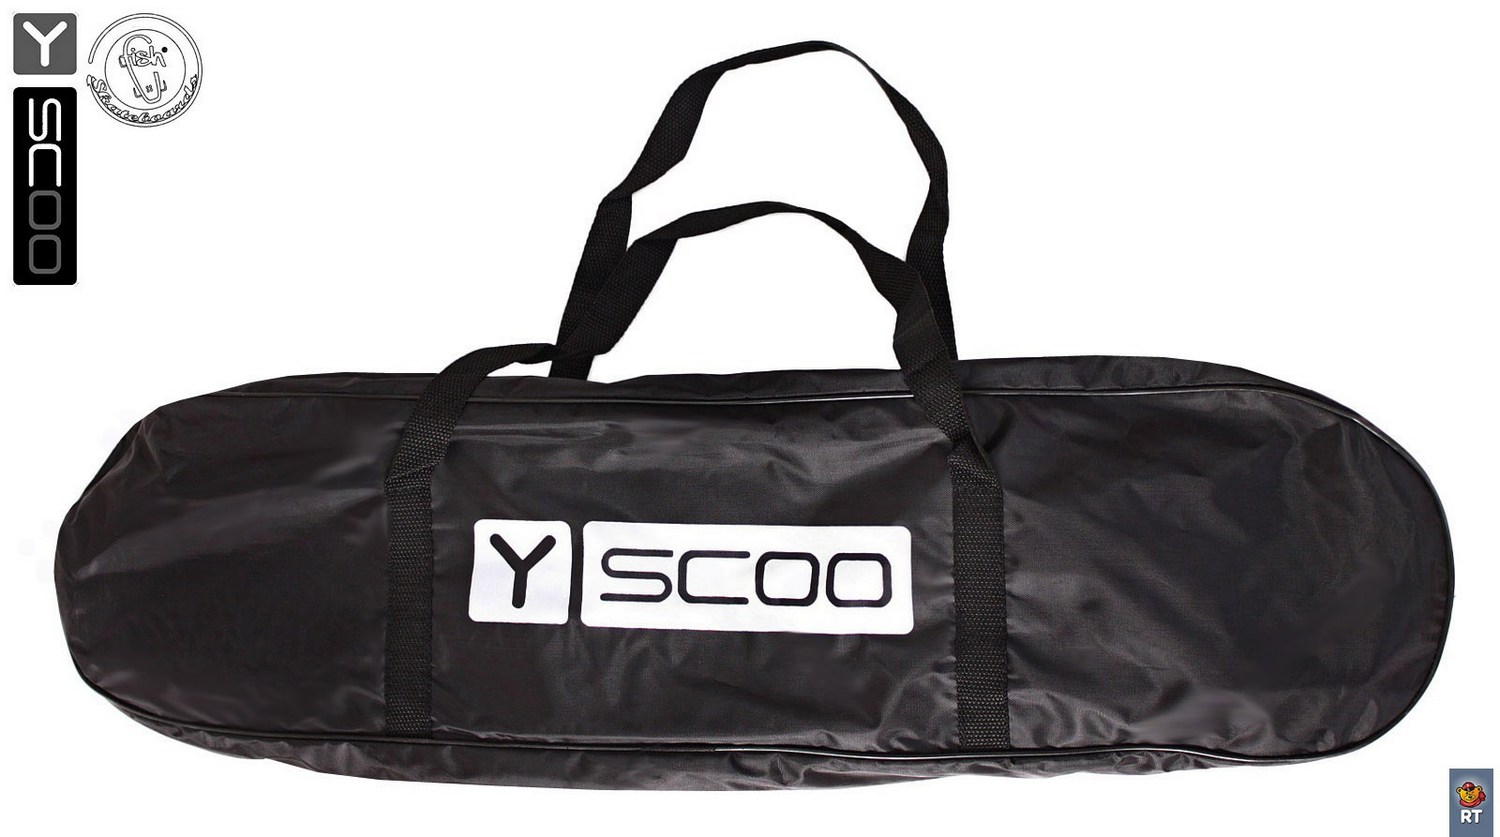 Скейтборд виниловый Y-Scoo Fishskateboard Print 22" 401G-R с сумкой, дизайн Розовые ромбы  